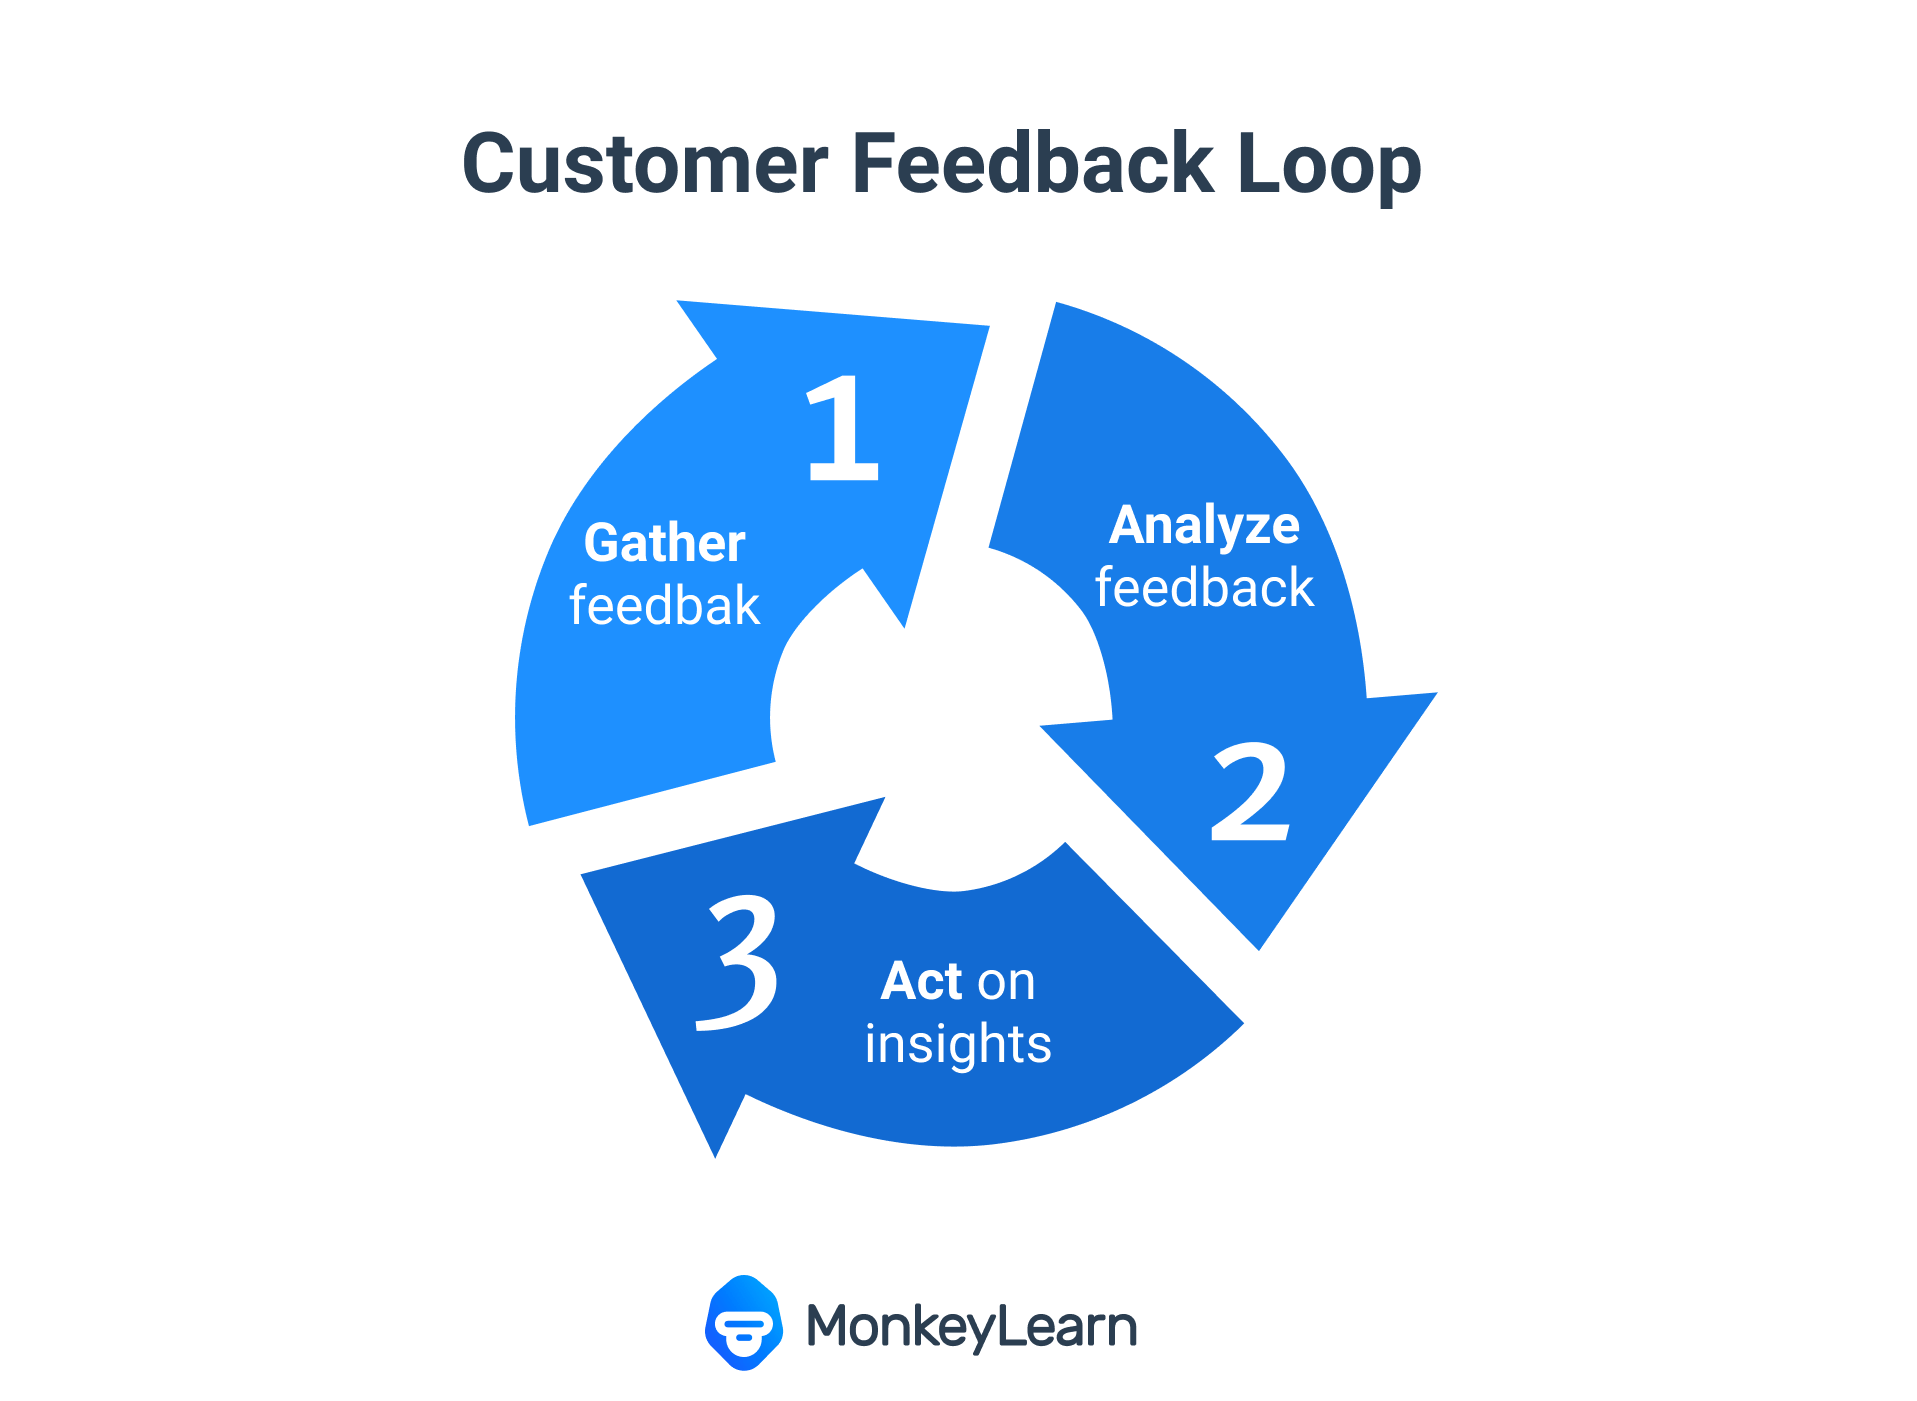 Three steps to close the customer feedback loop: 1.Gather feedback, 2. Analyze feedback, 3. Act on customer feedback